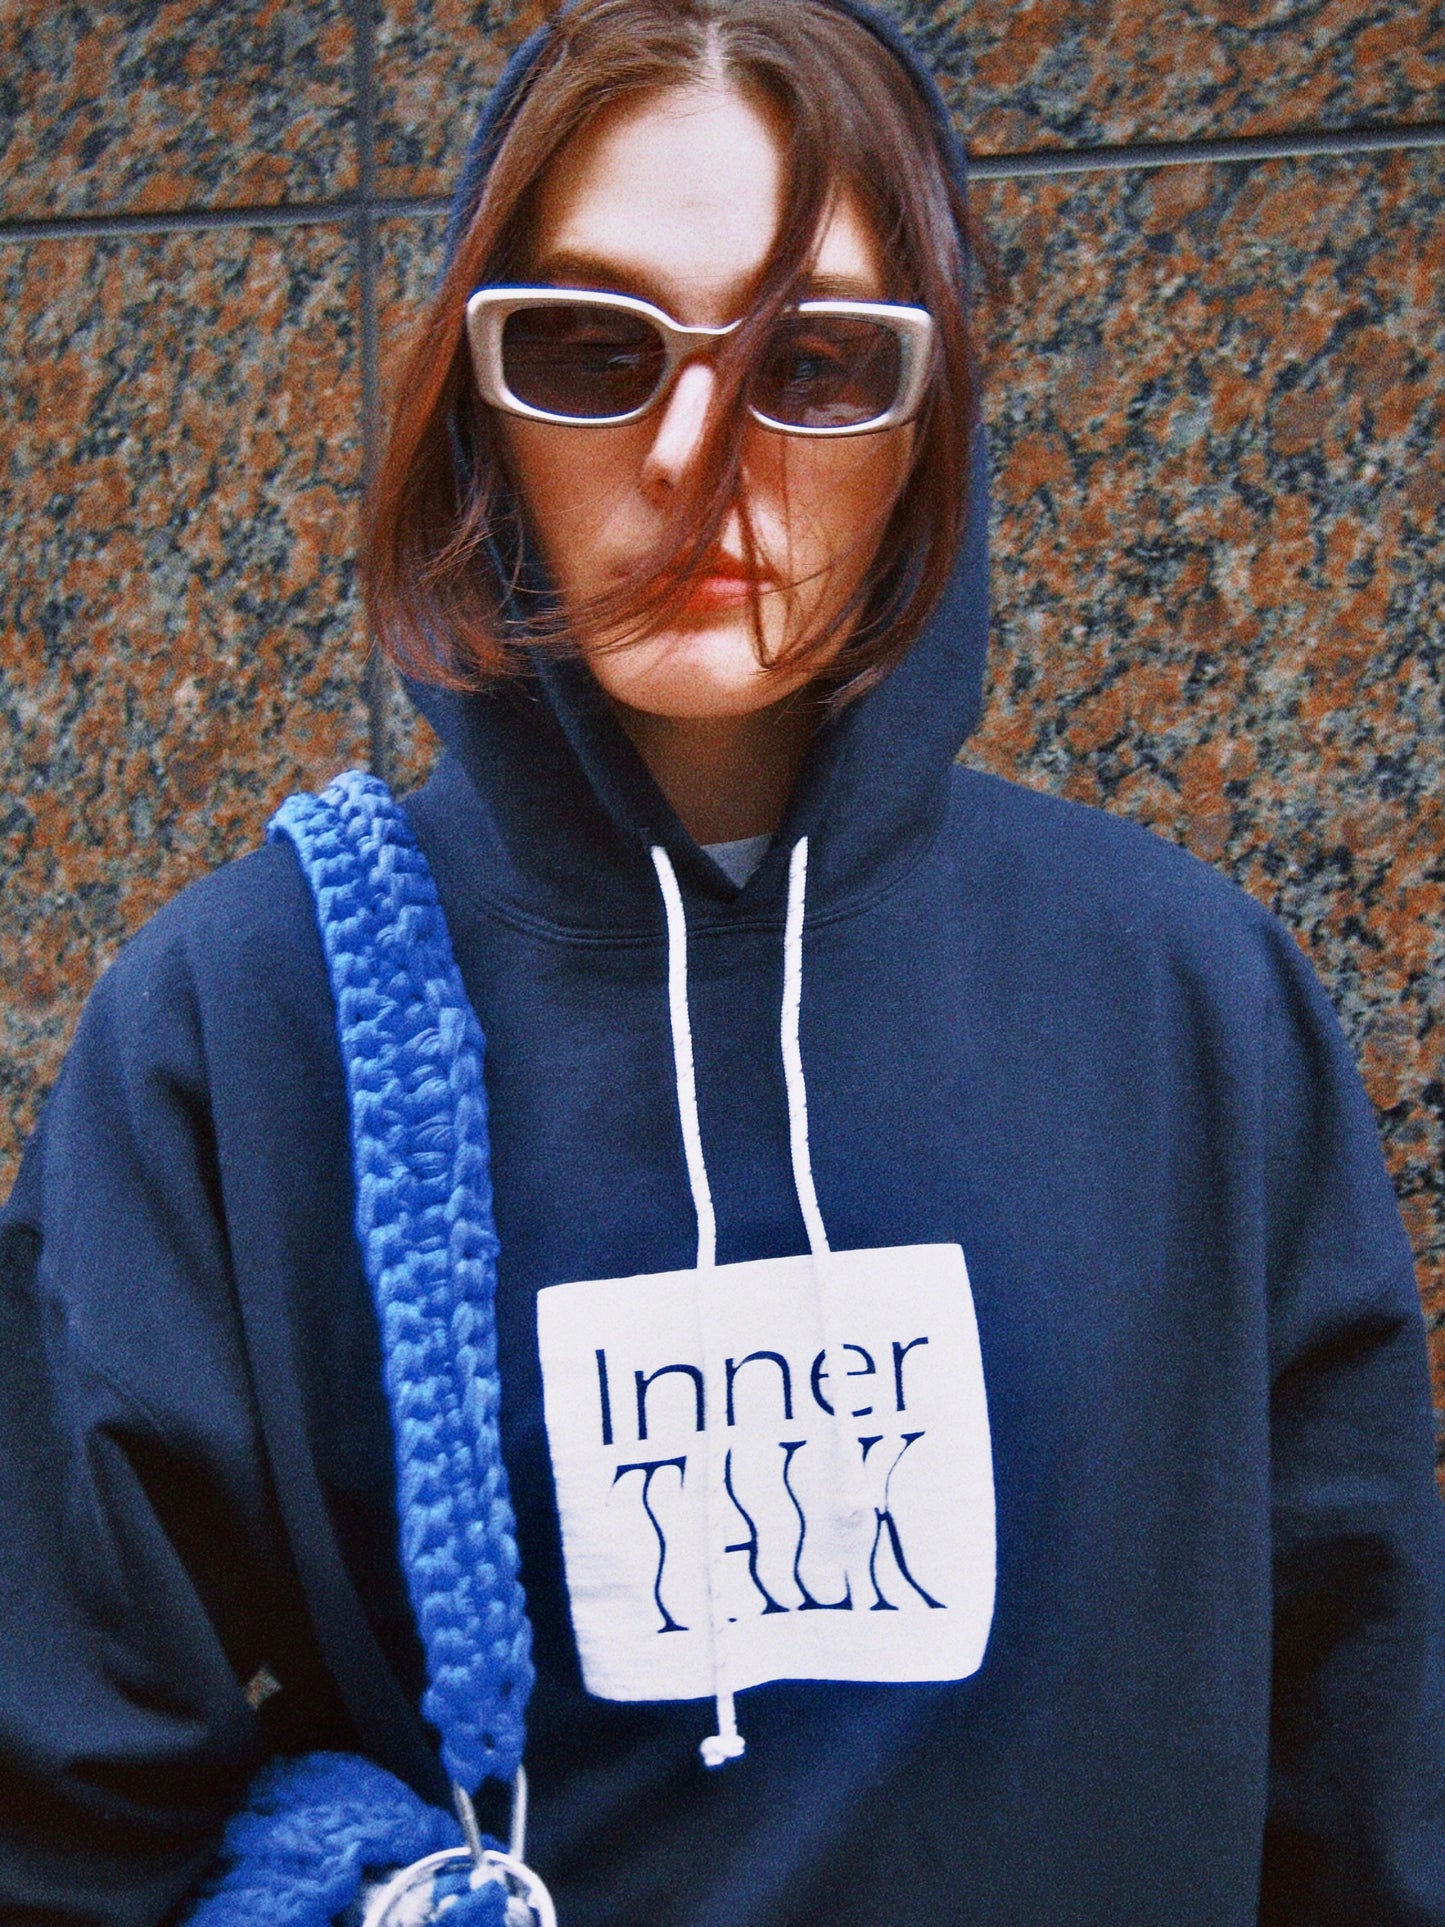 innerTALK box logo hoodie